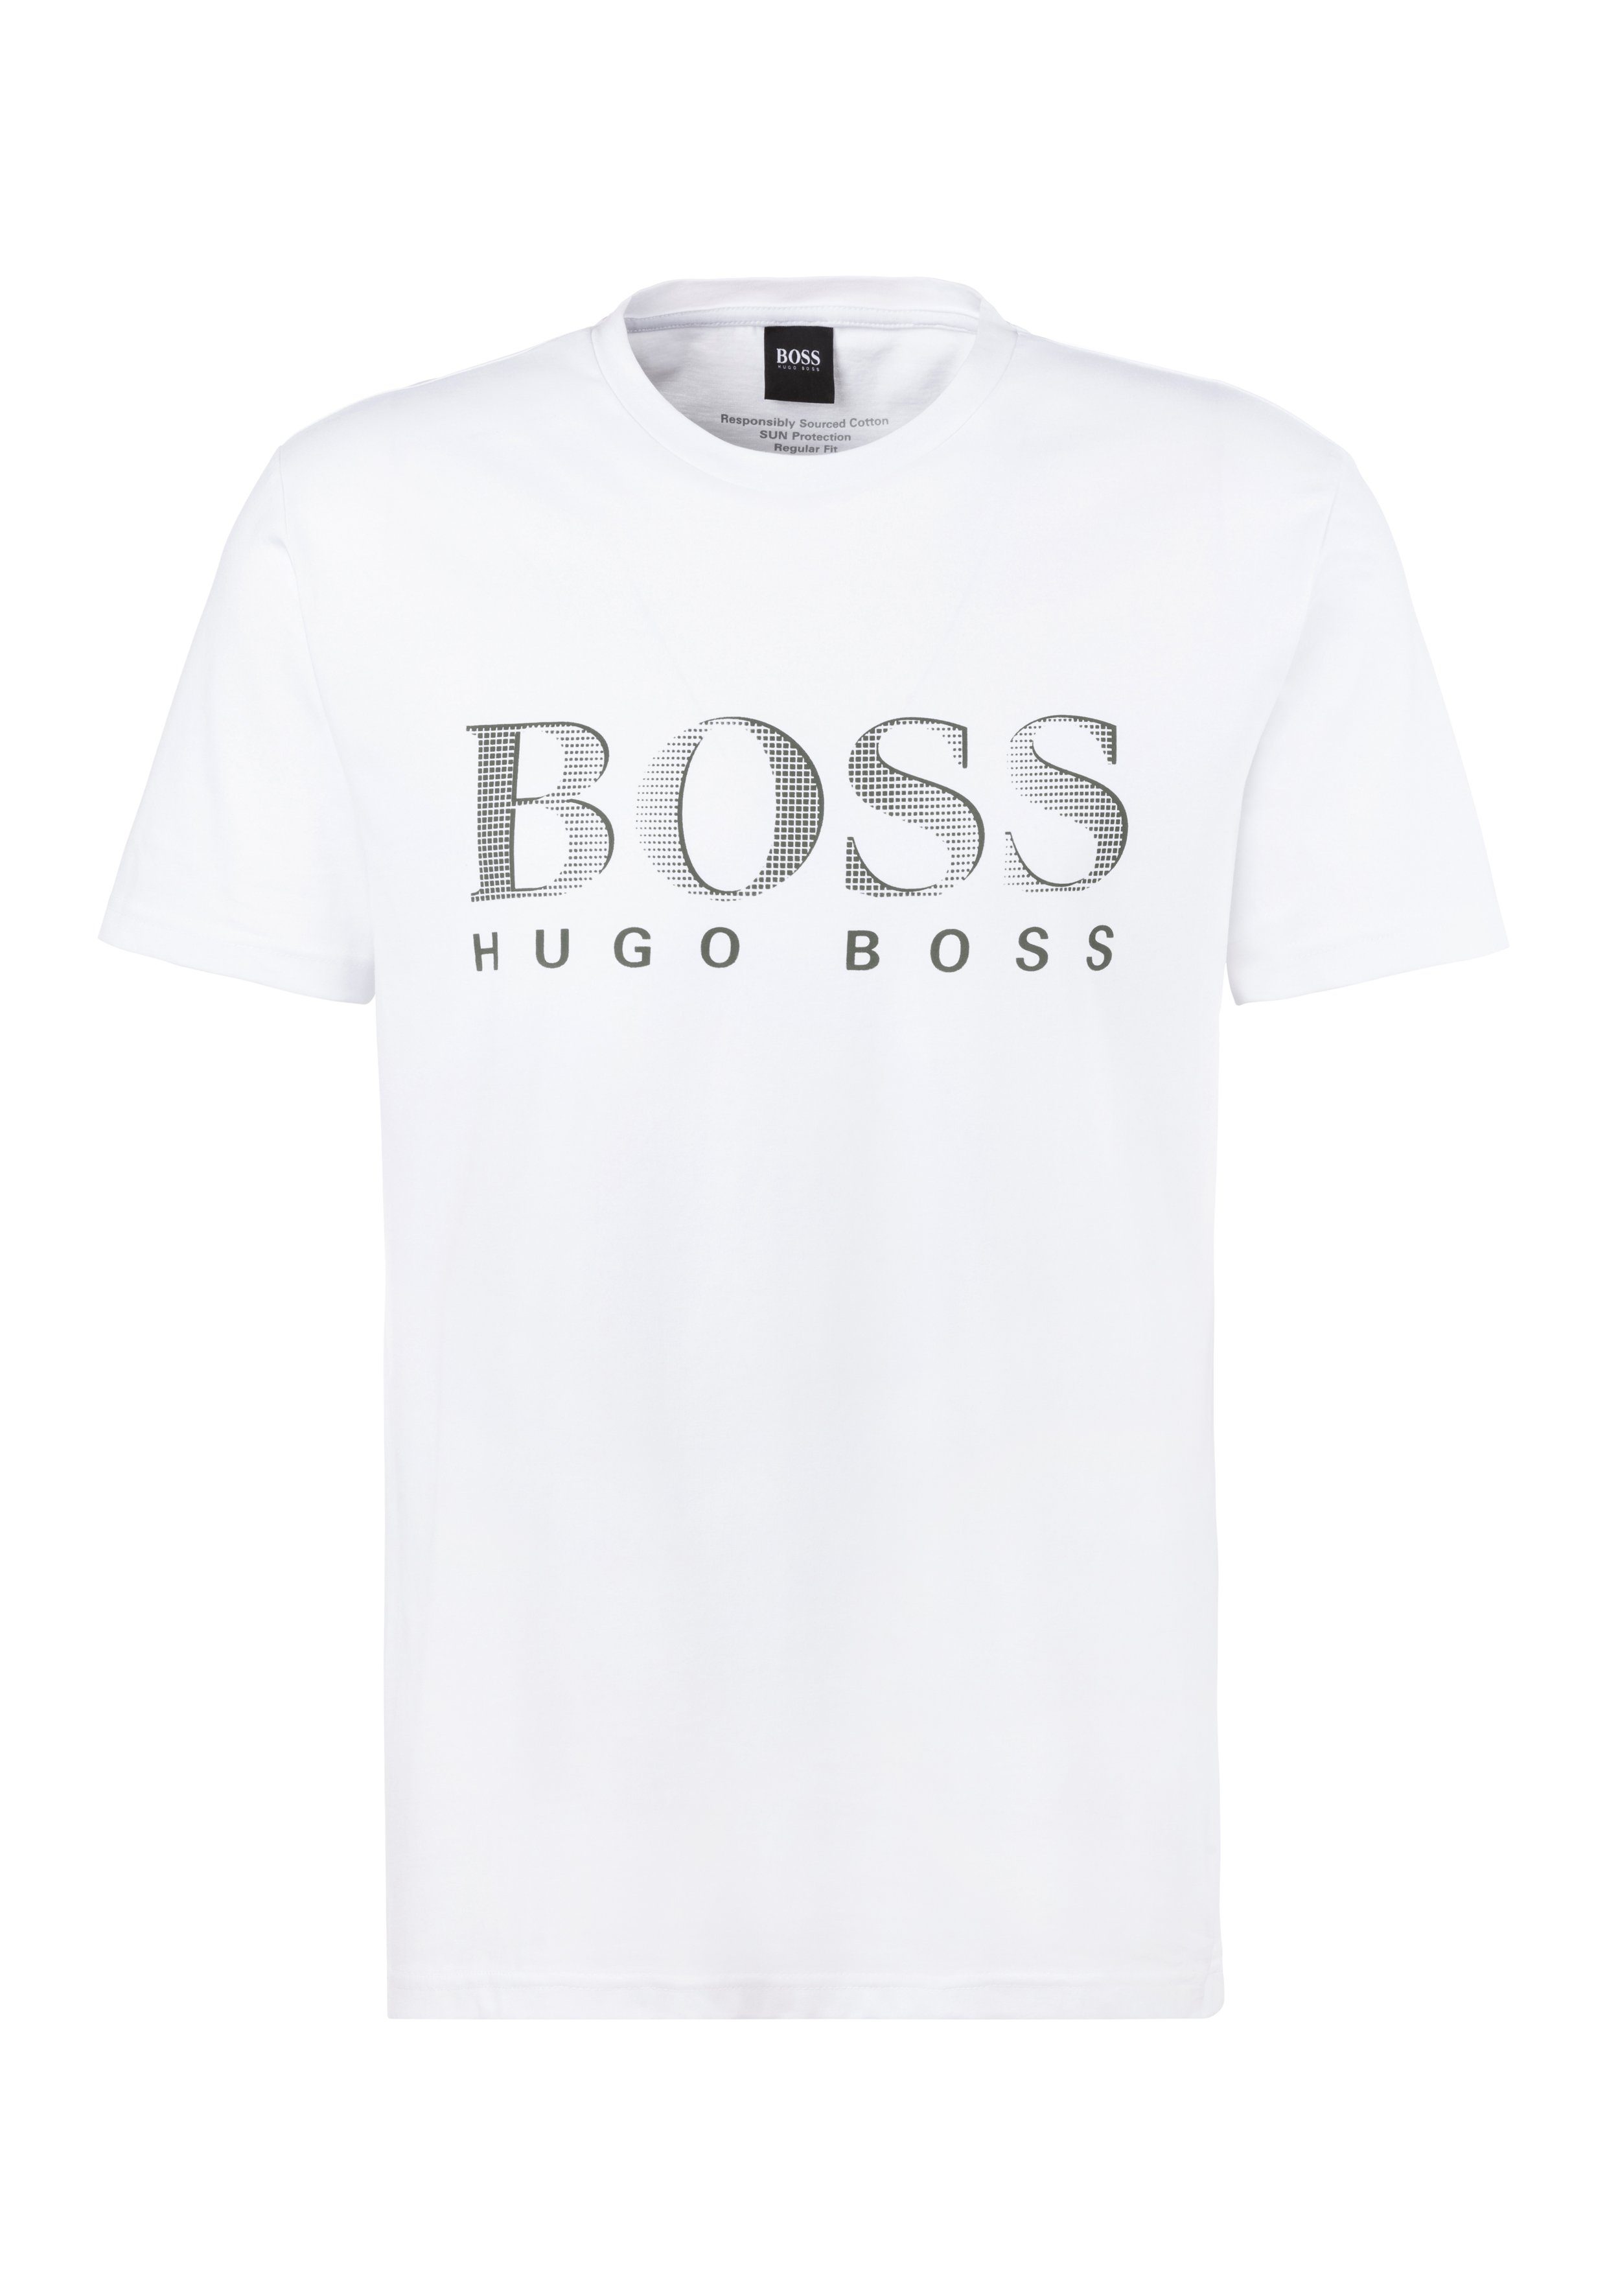 HUGO BOSS Herren T-Shirt online kaufen | OTTO